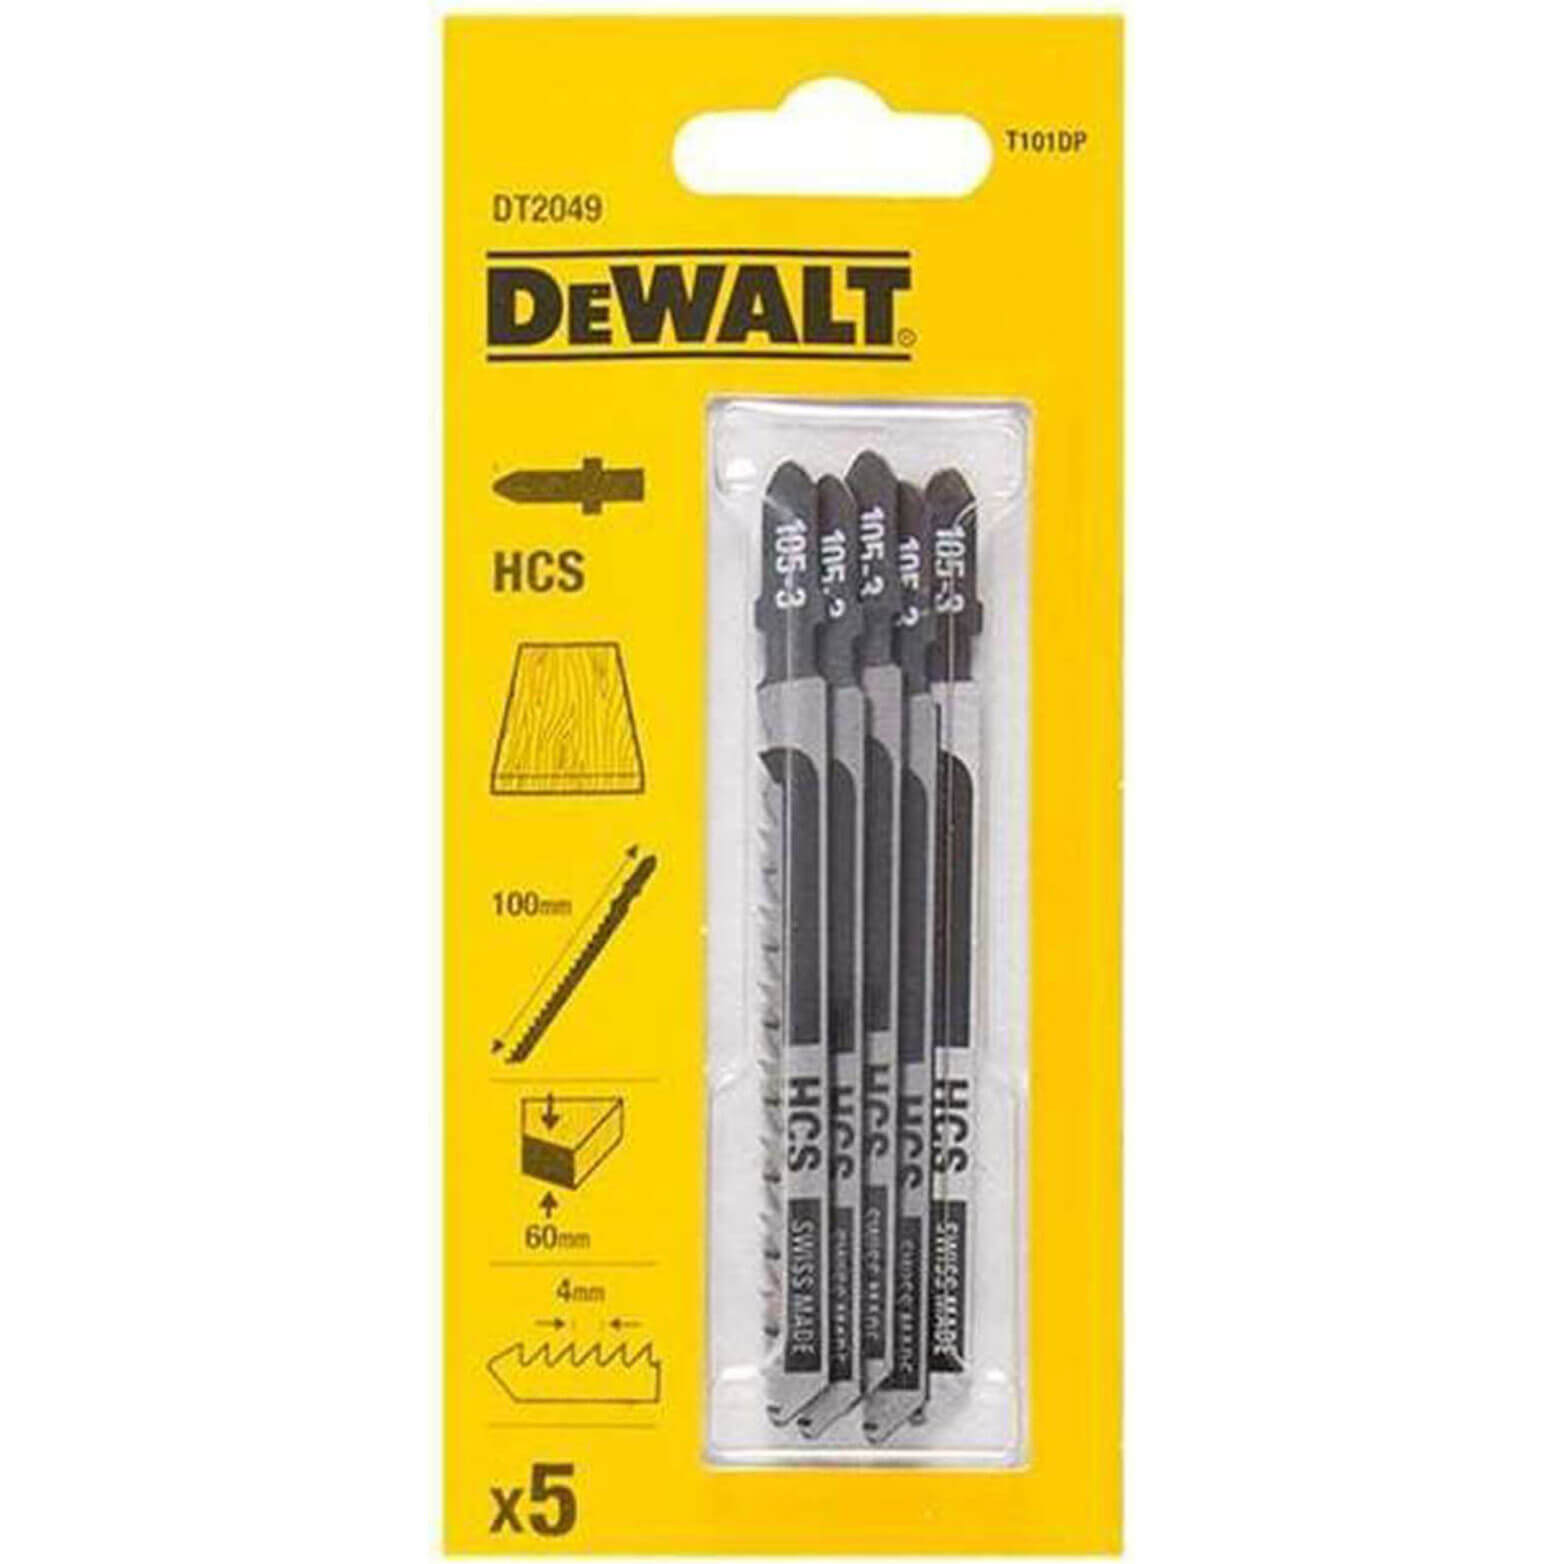 Photos - Power Tool Accessory DeWALT T101DP HCS Wood Cutting Jigsaw Blades Pack of 5 DT2049 